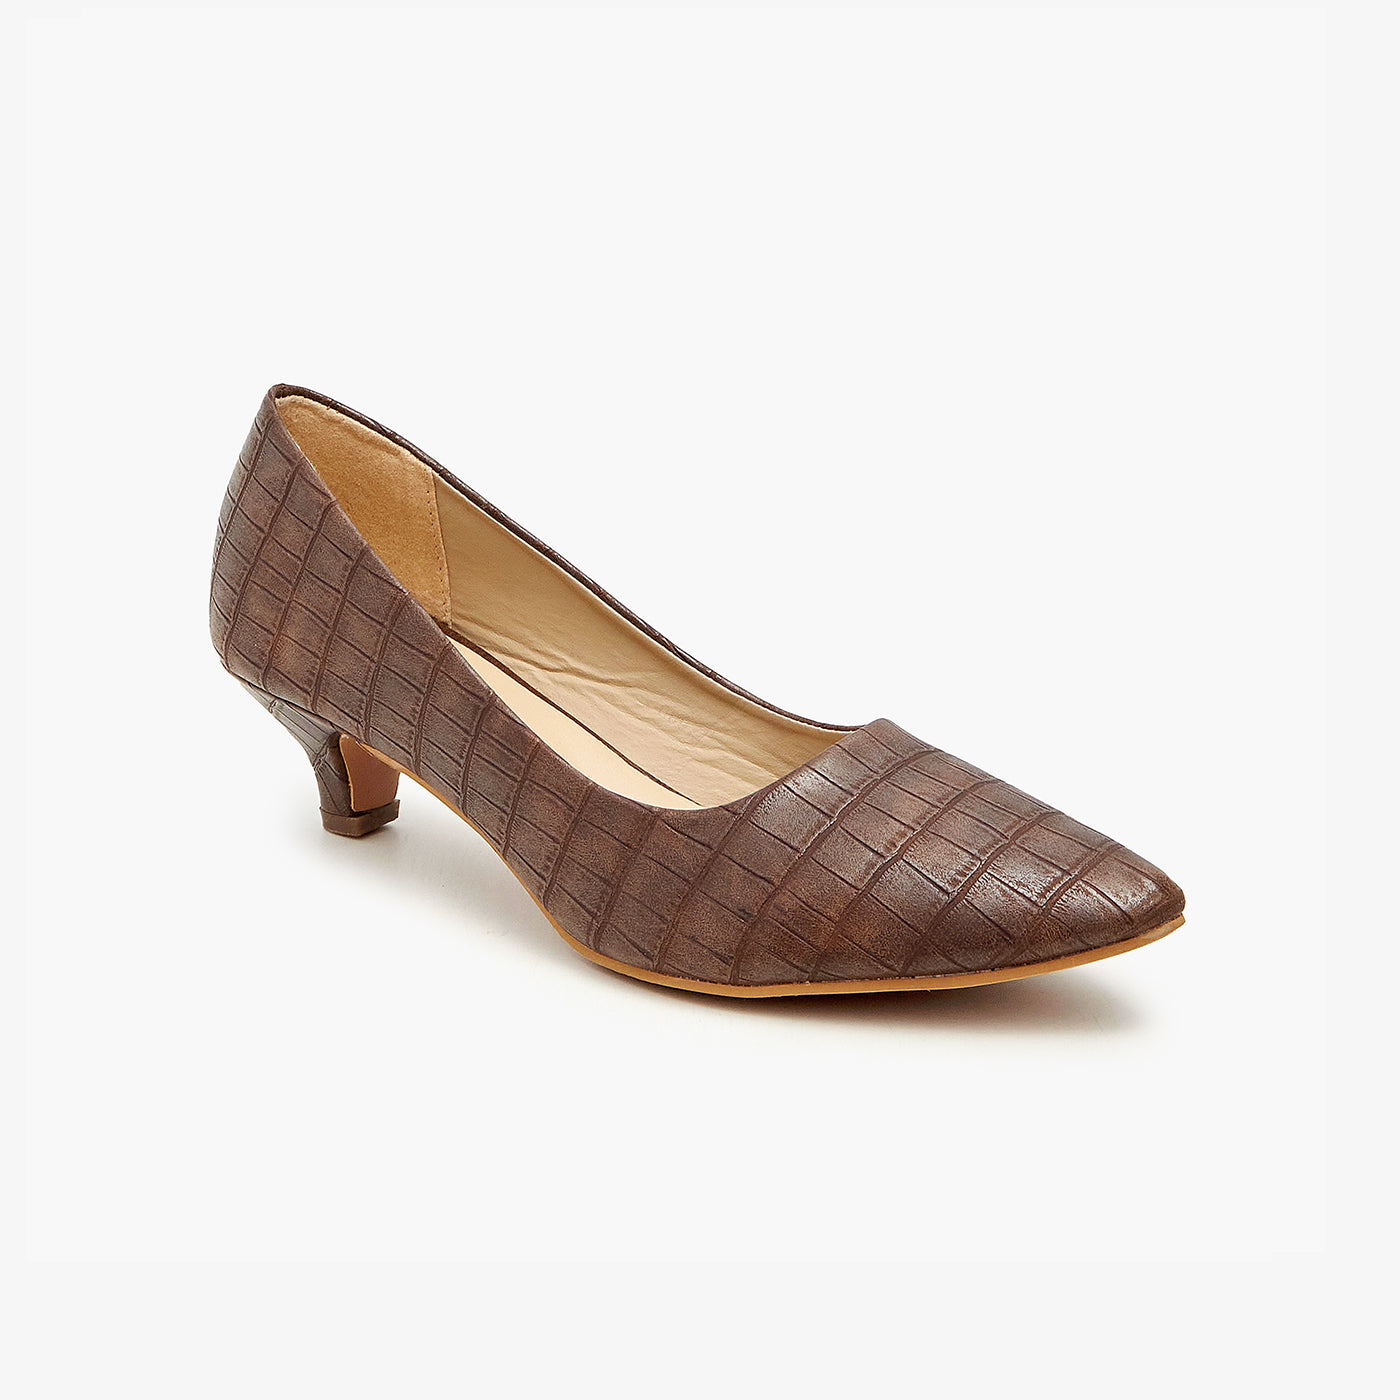 Buy Brown Heels For Women Online in India | Mochi Shoes